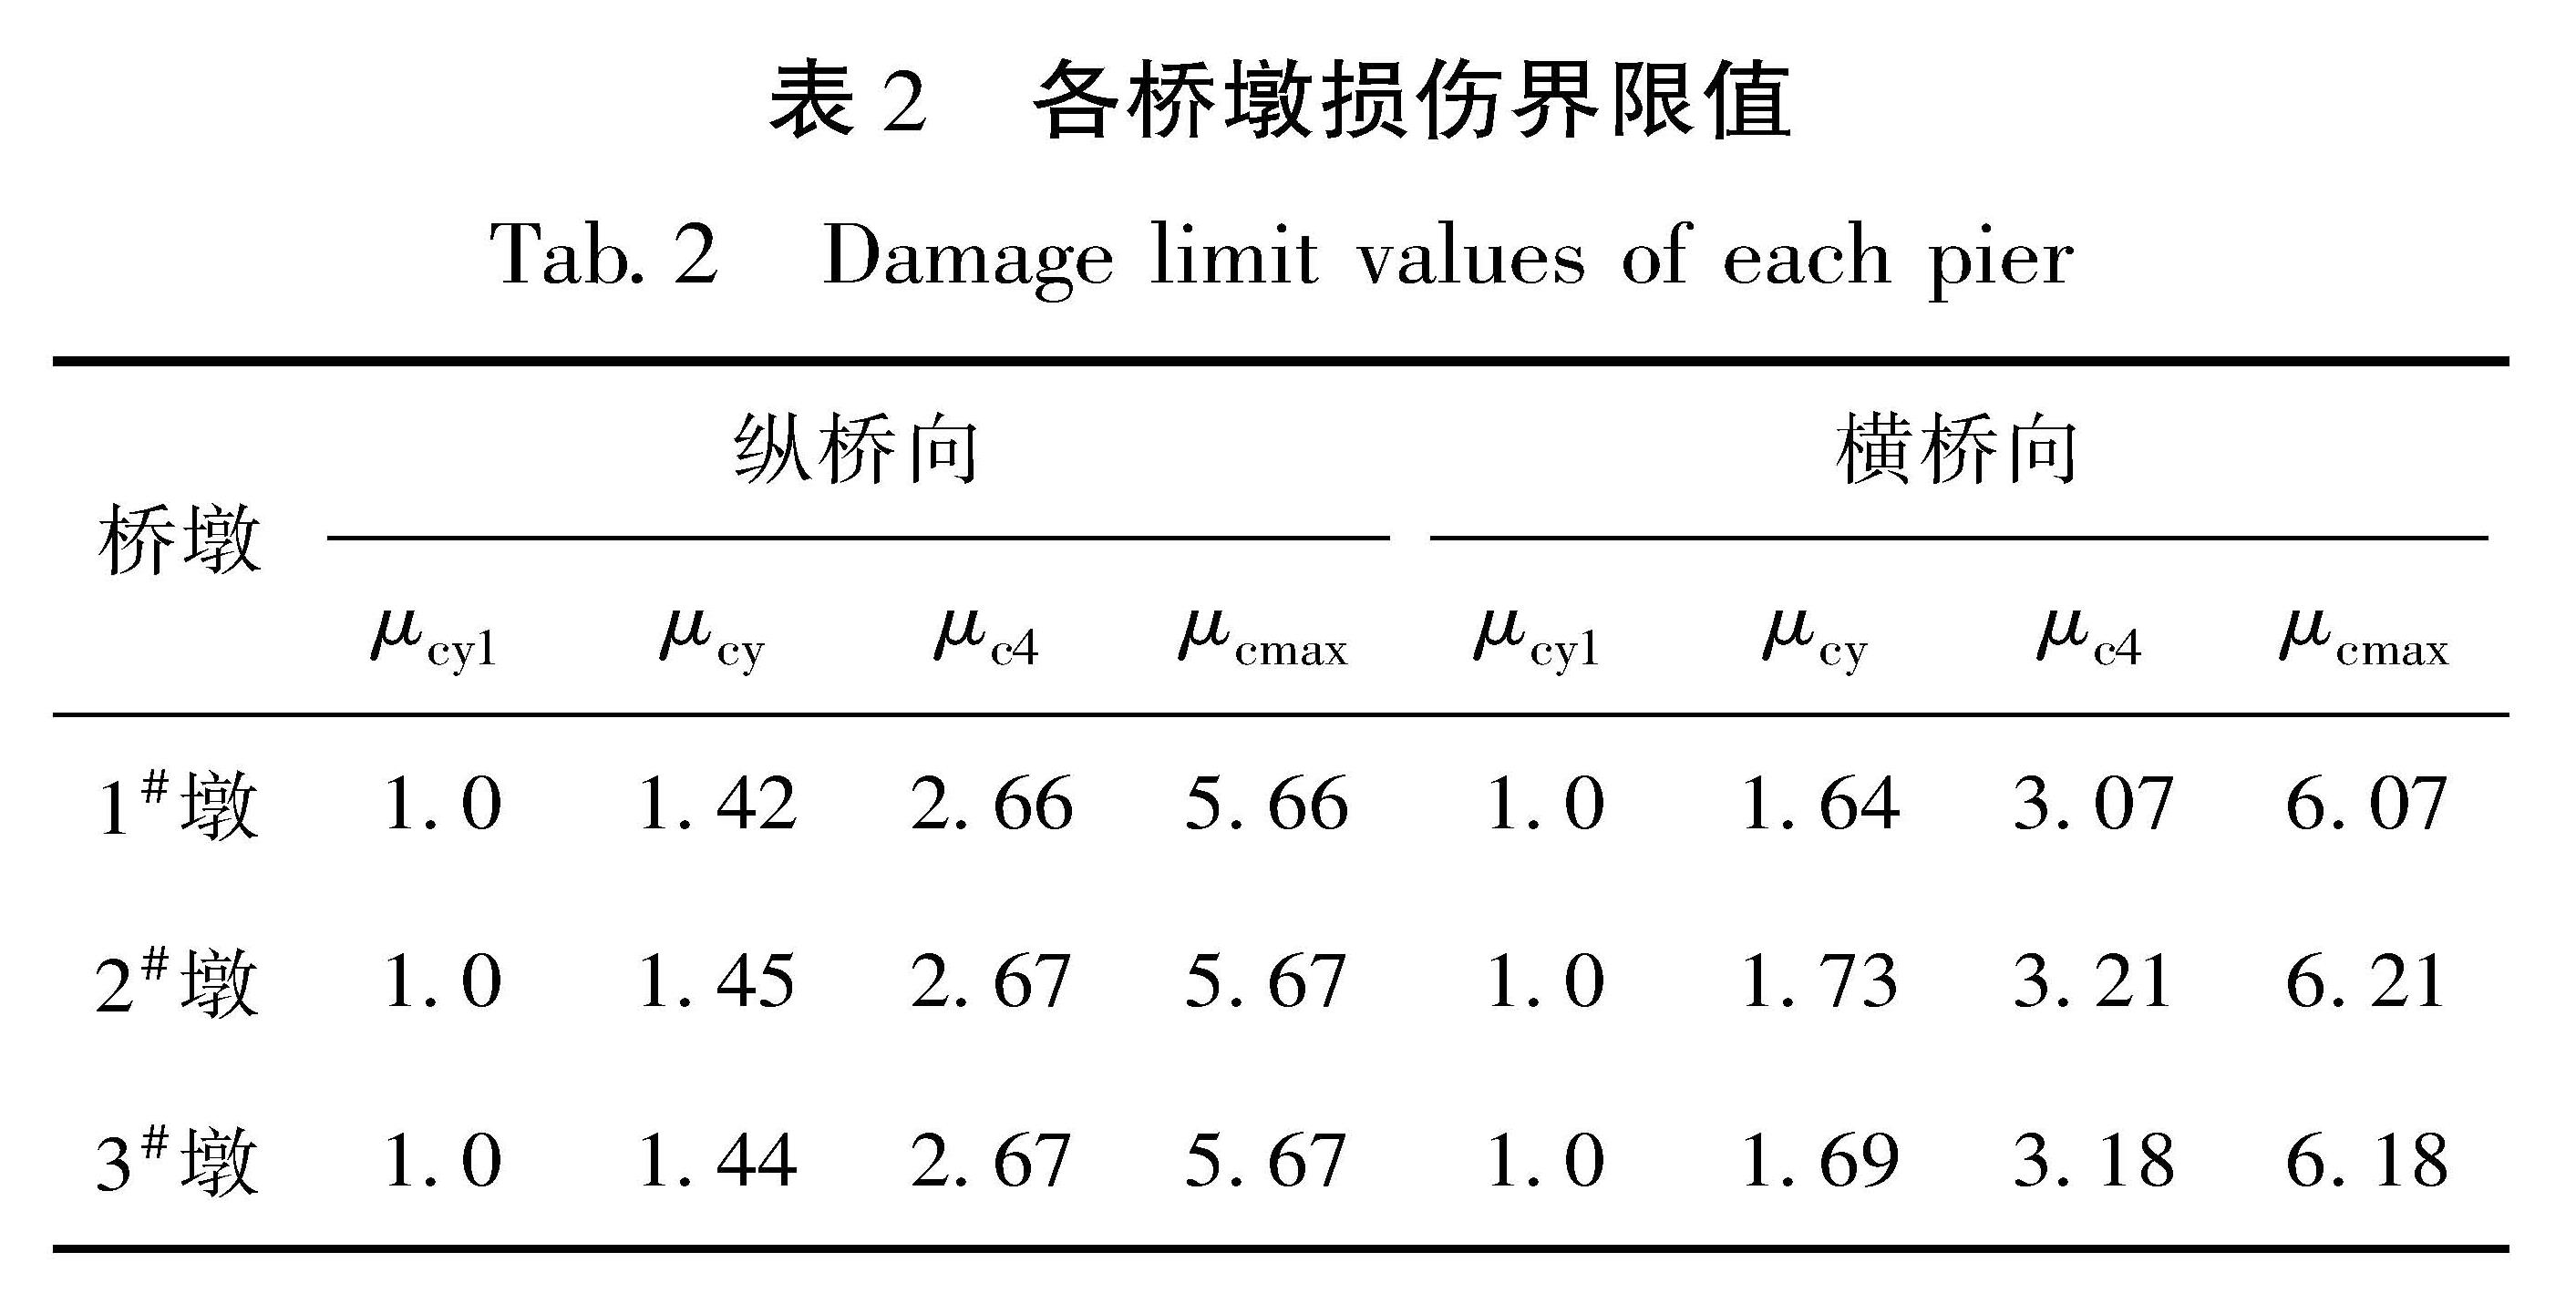 表2 各桥墩损伤界限值<br/>Tab.2 Damage limit values of each pier